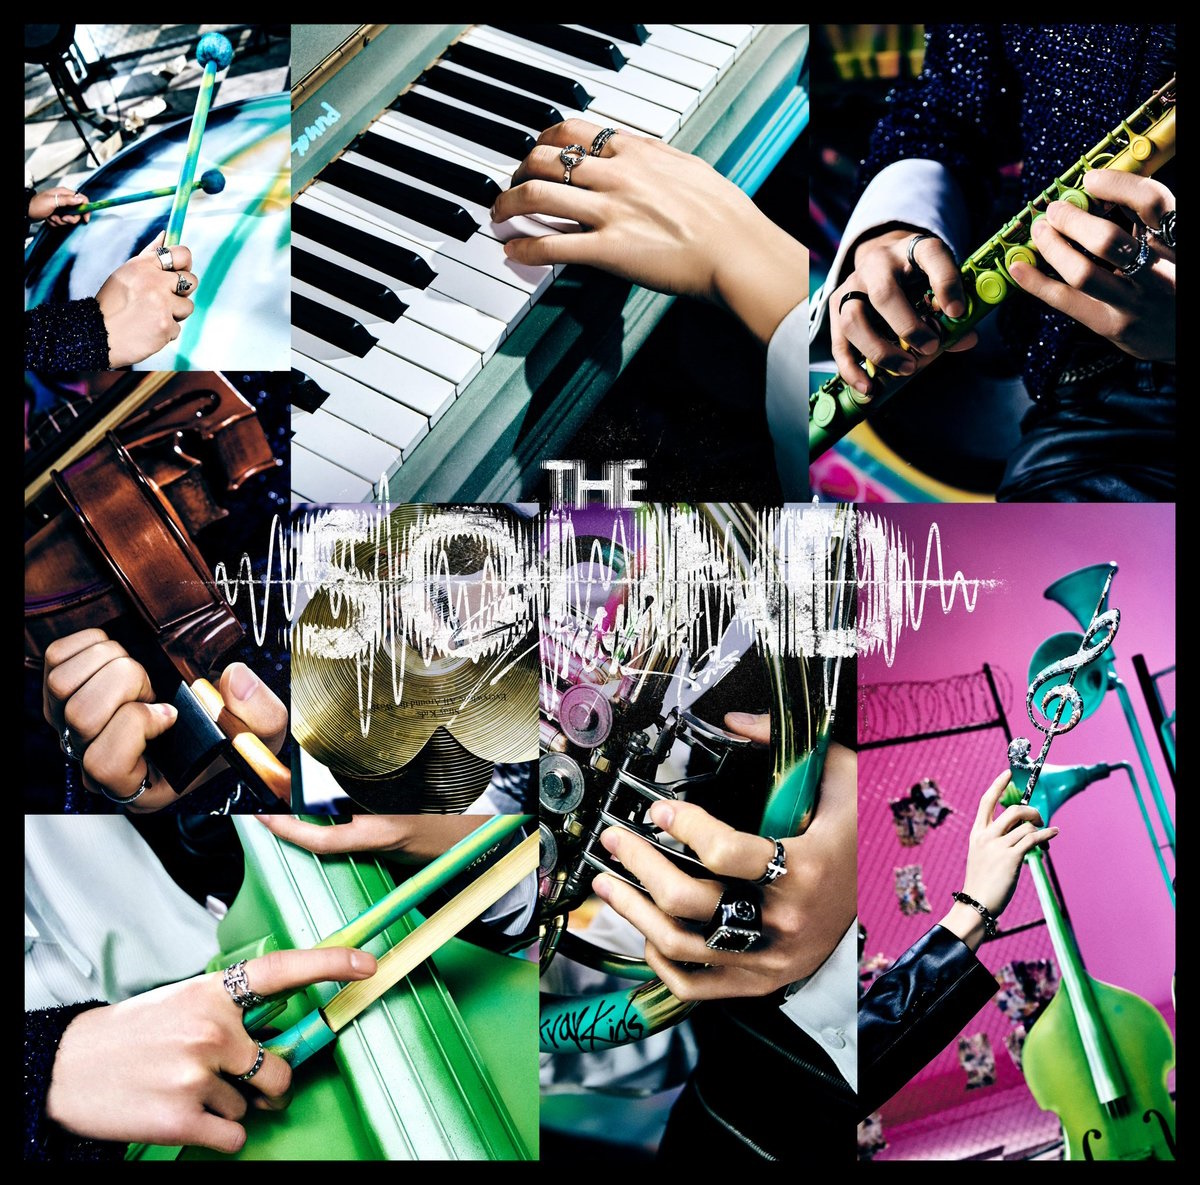 『Stray Kids - THE SOUND』収録の『THE SOUND』ジャケット